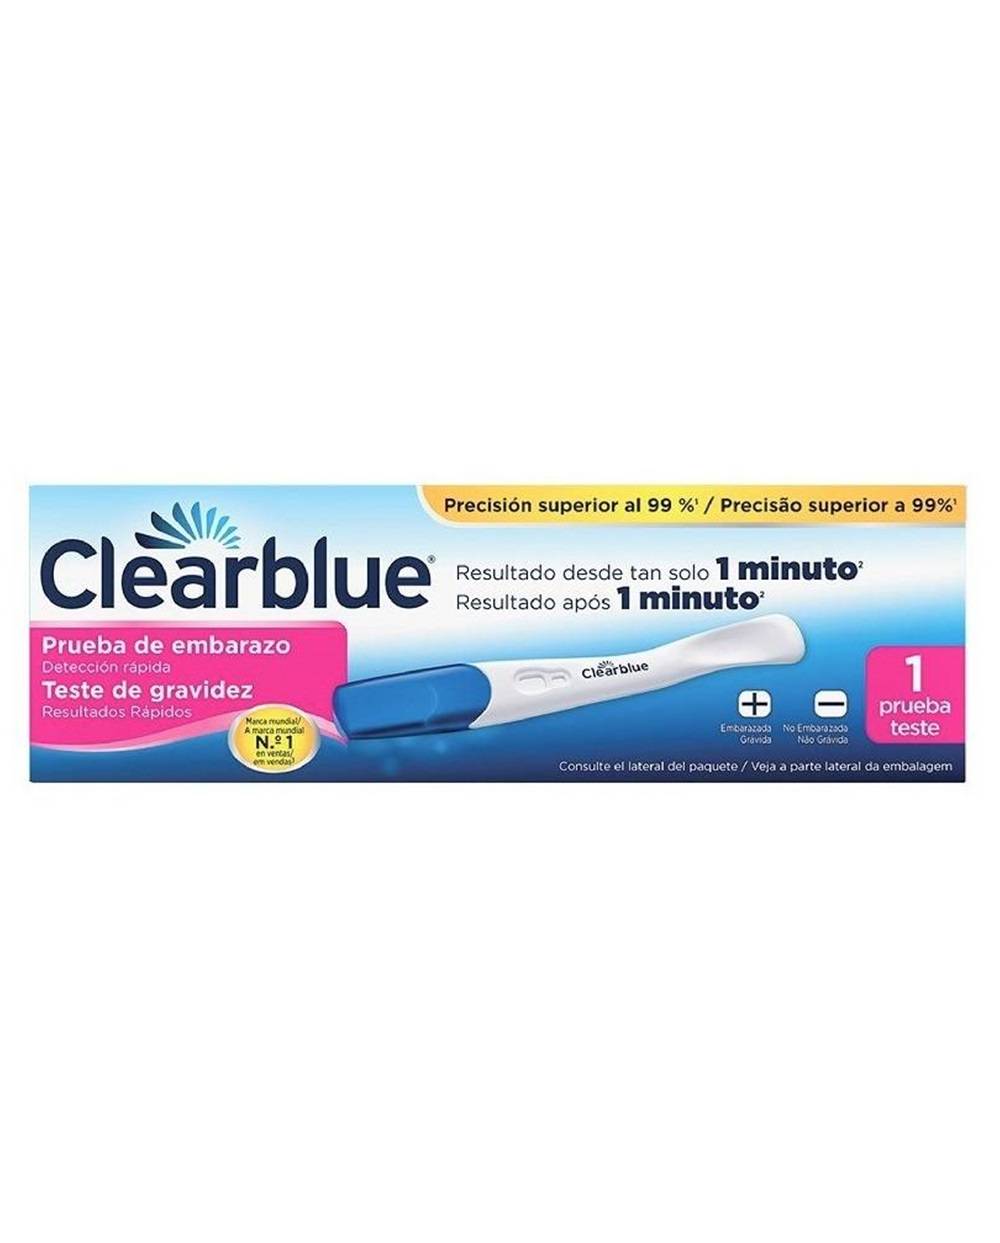 Test de embarazo Analógico Clearblue n